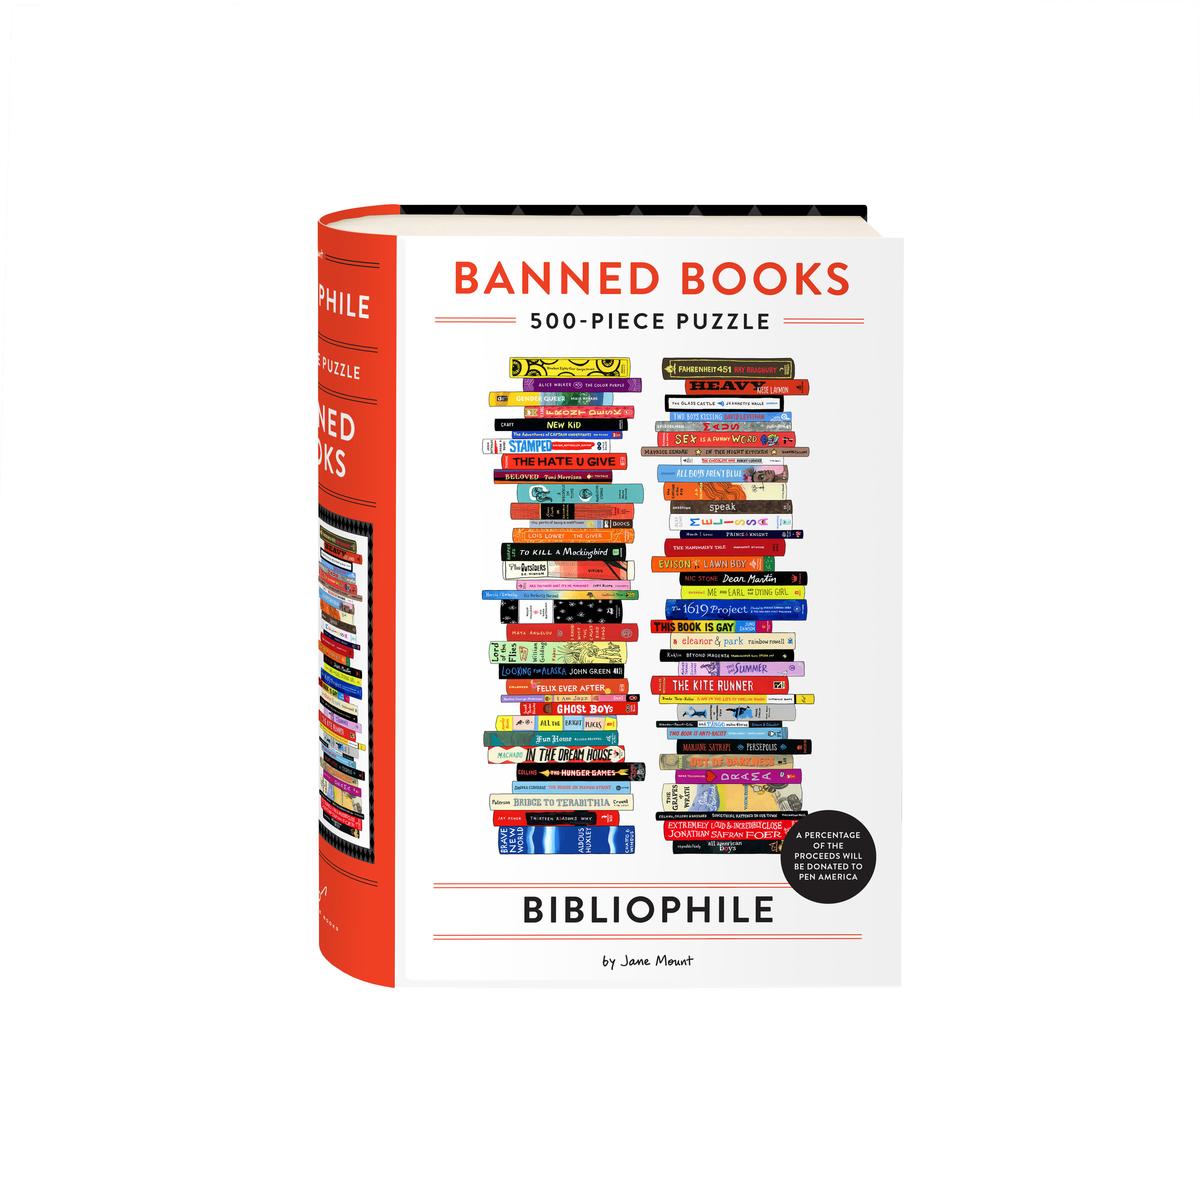 "Bibliophile: Banned Books" Puzzle - 500 Piece